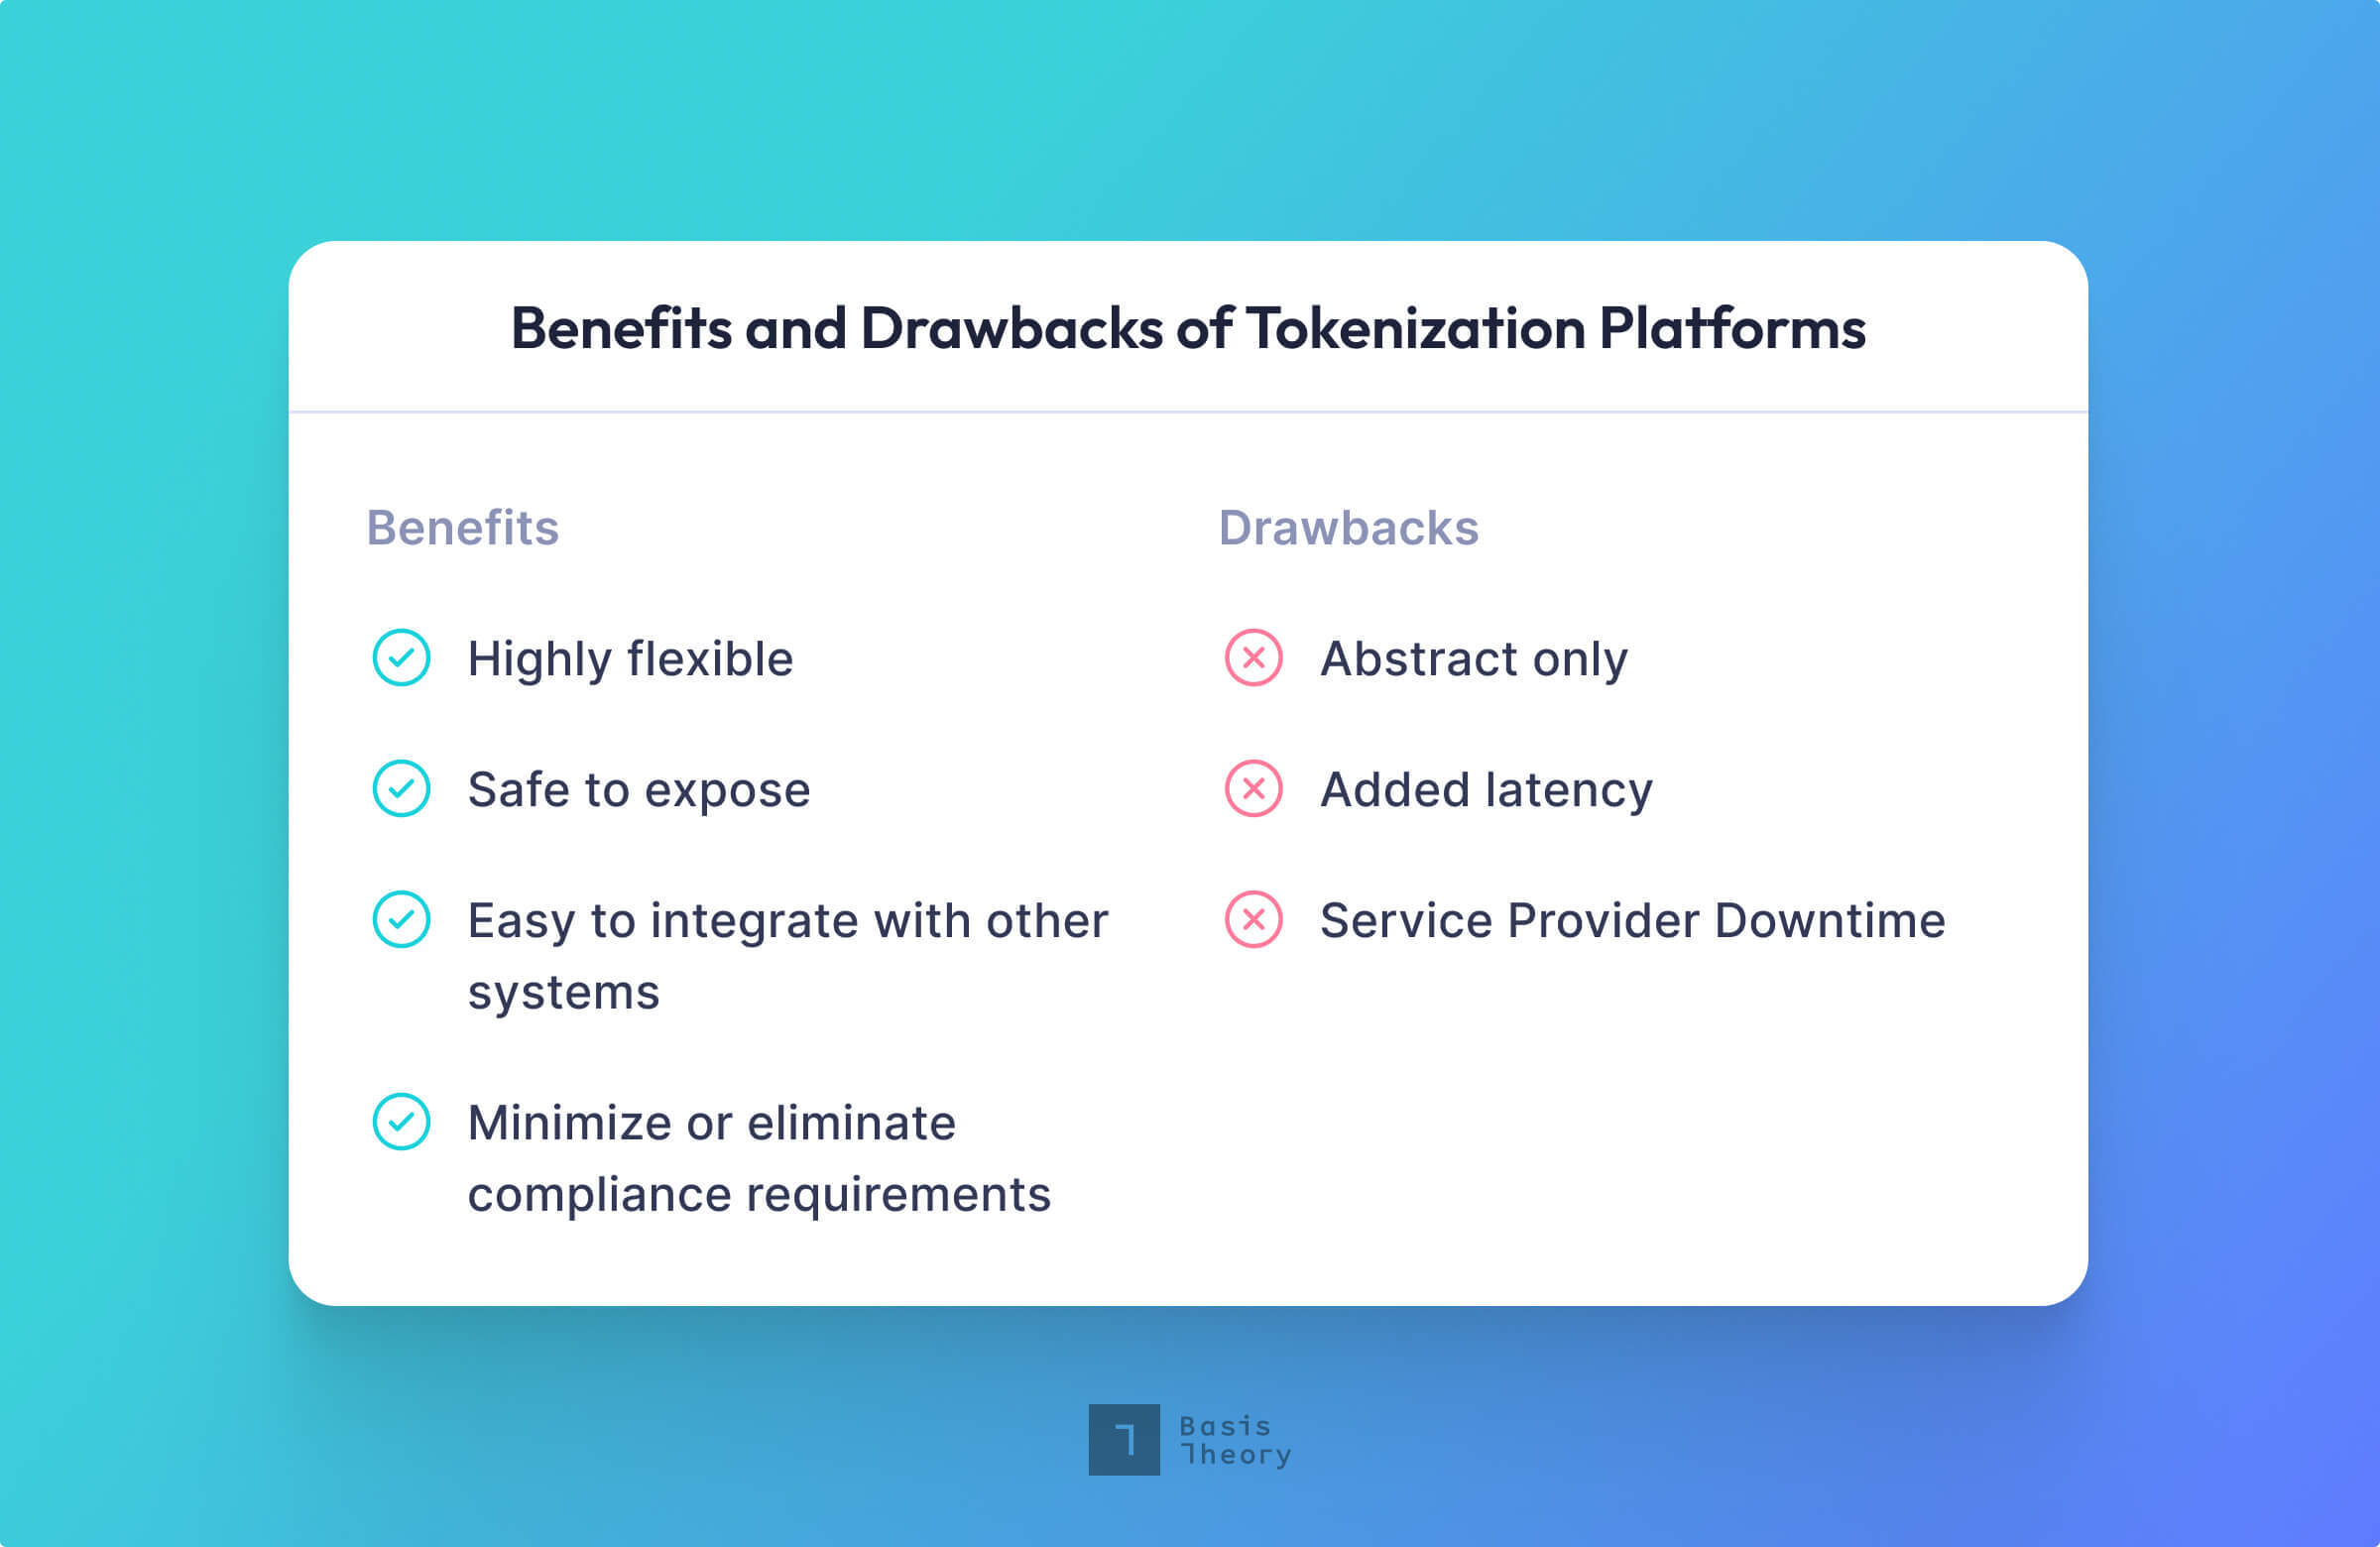 The benefits and drawbacks of tokenization platforms